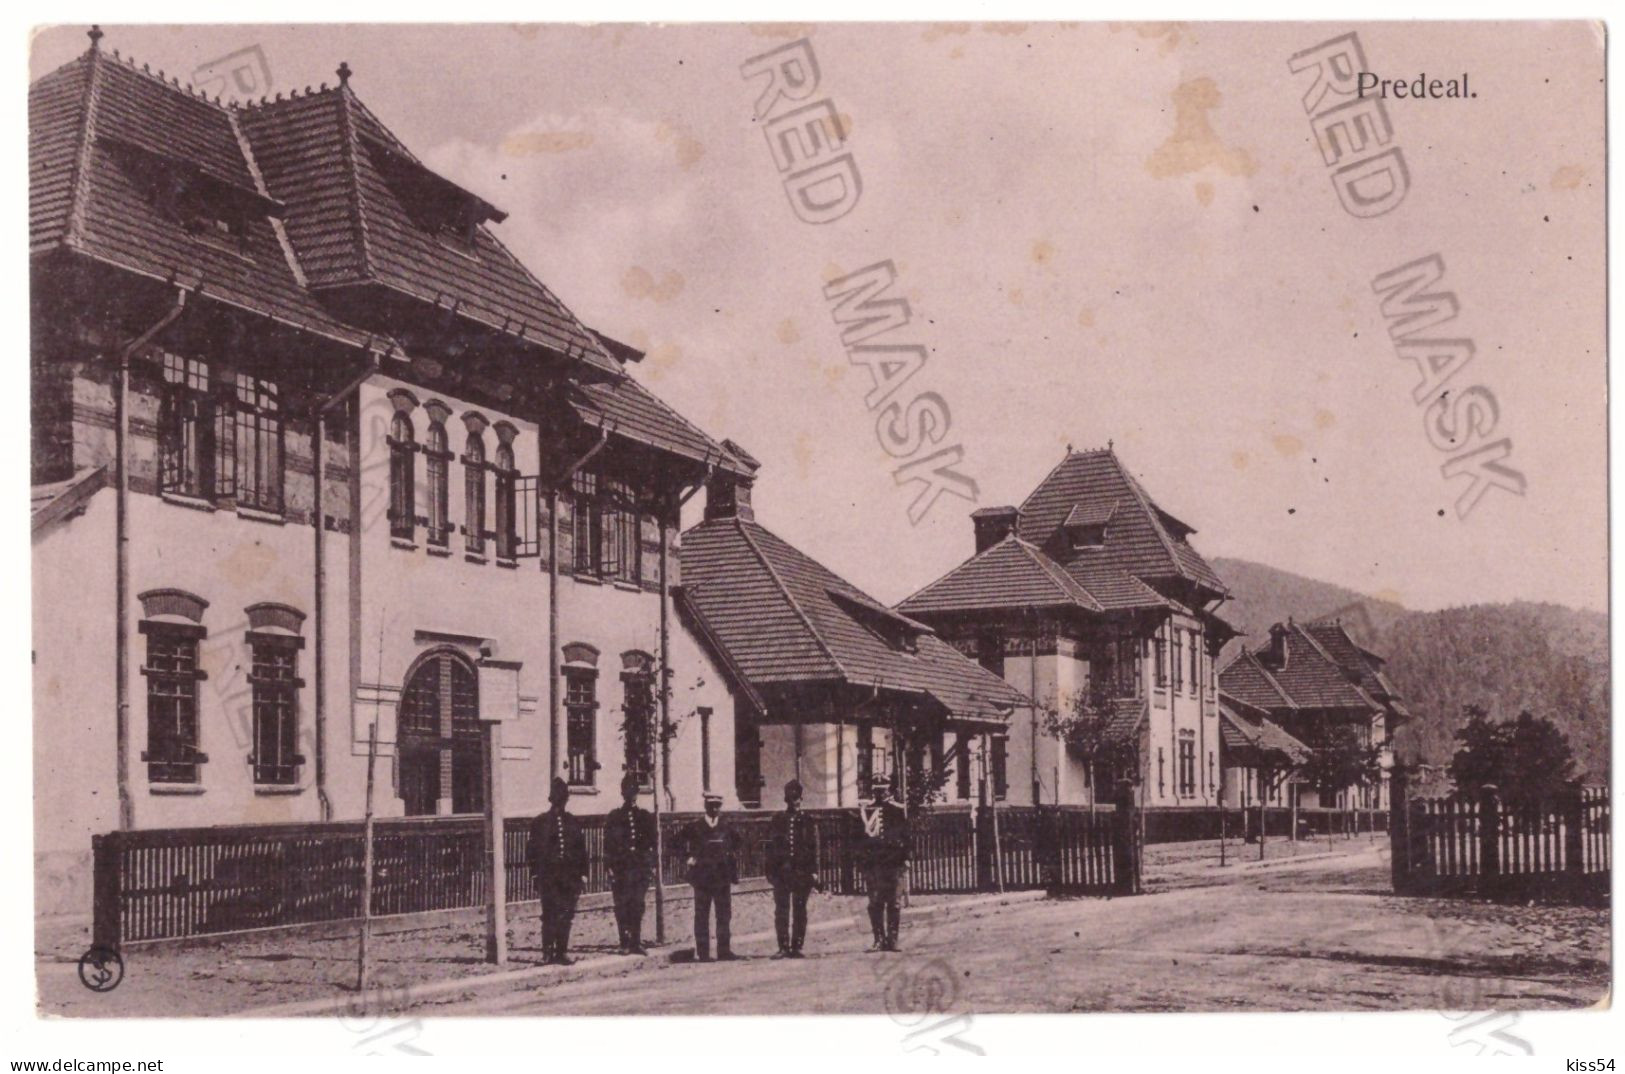 RO 86 - 21217 PREDEAL, Brasov, Romania - Old Postcard - Used - 1917 - Rumänien